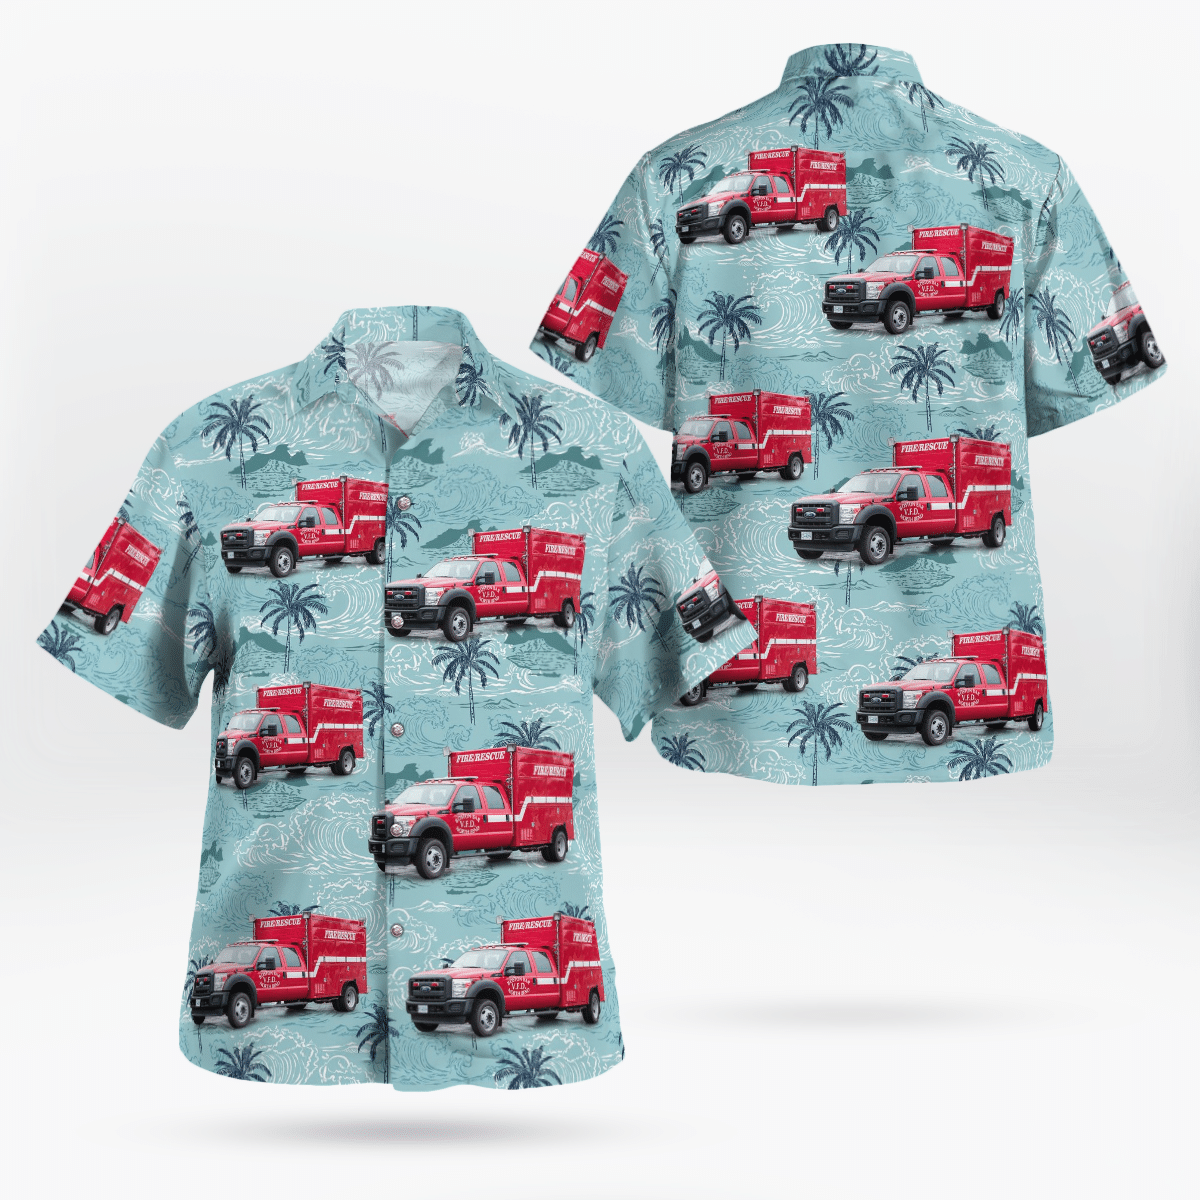 Listed below are some High-quality Aloha Shirt 1